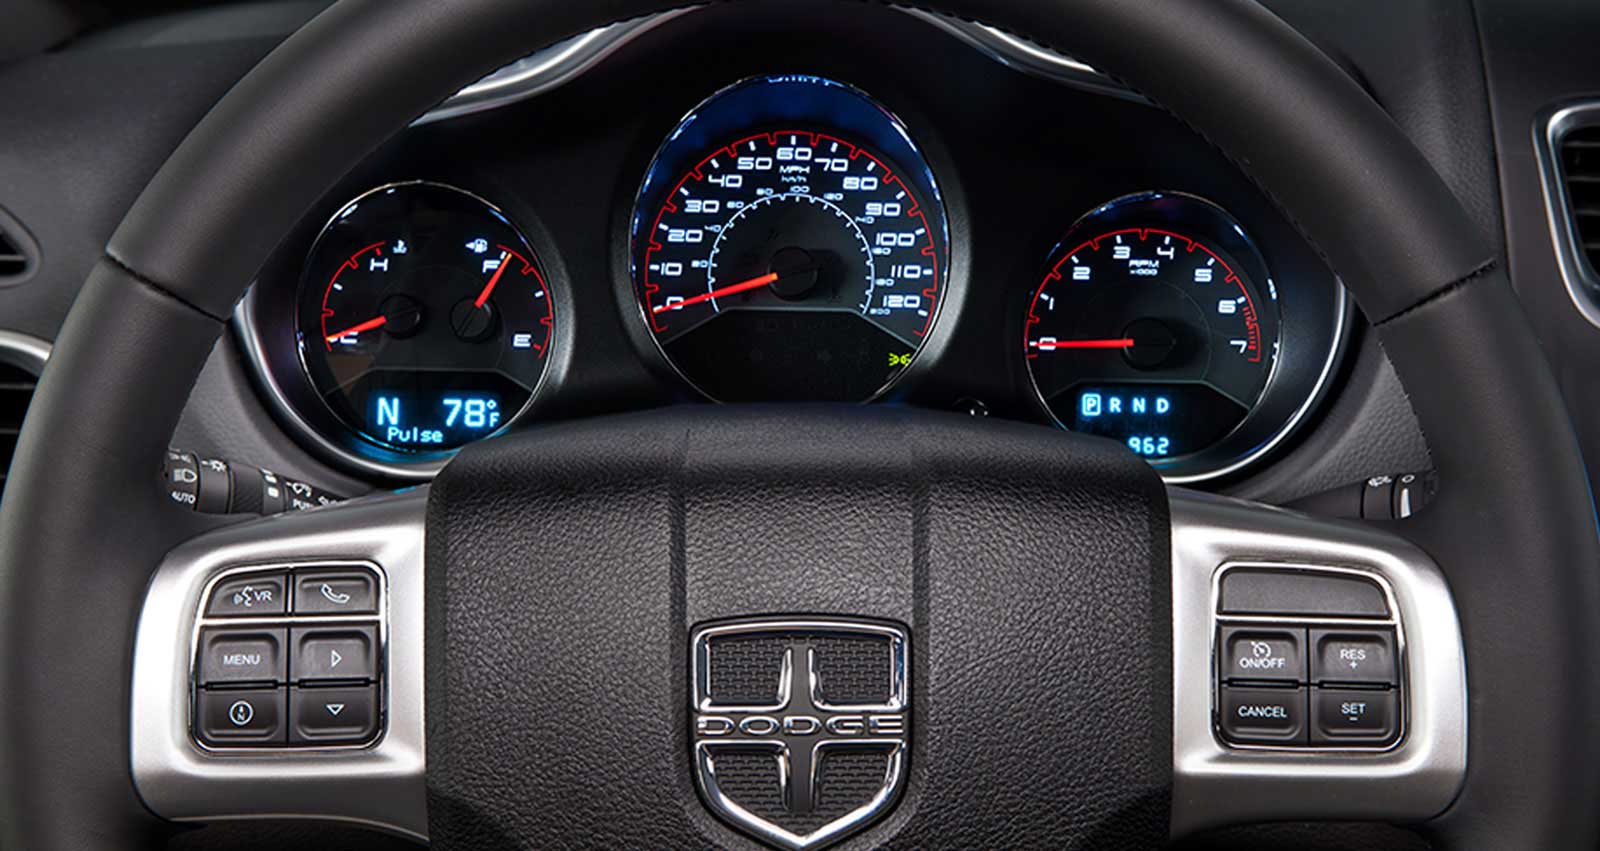 2014 Dodge Avenger SE Interior Steering wheel mounted controls